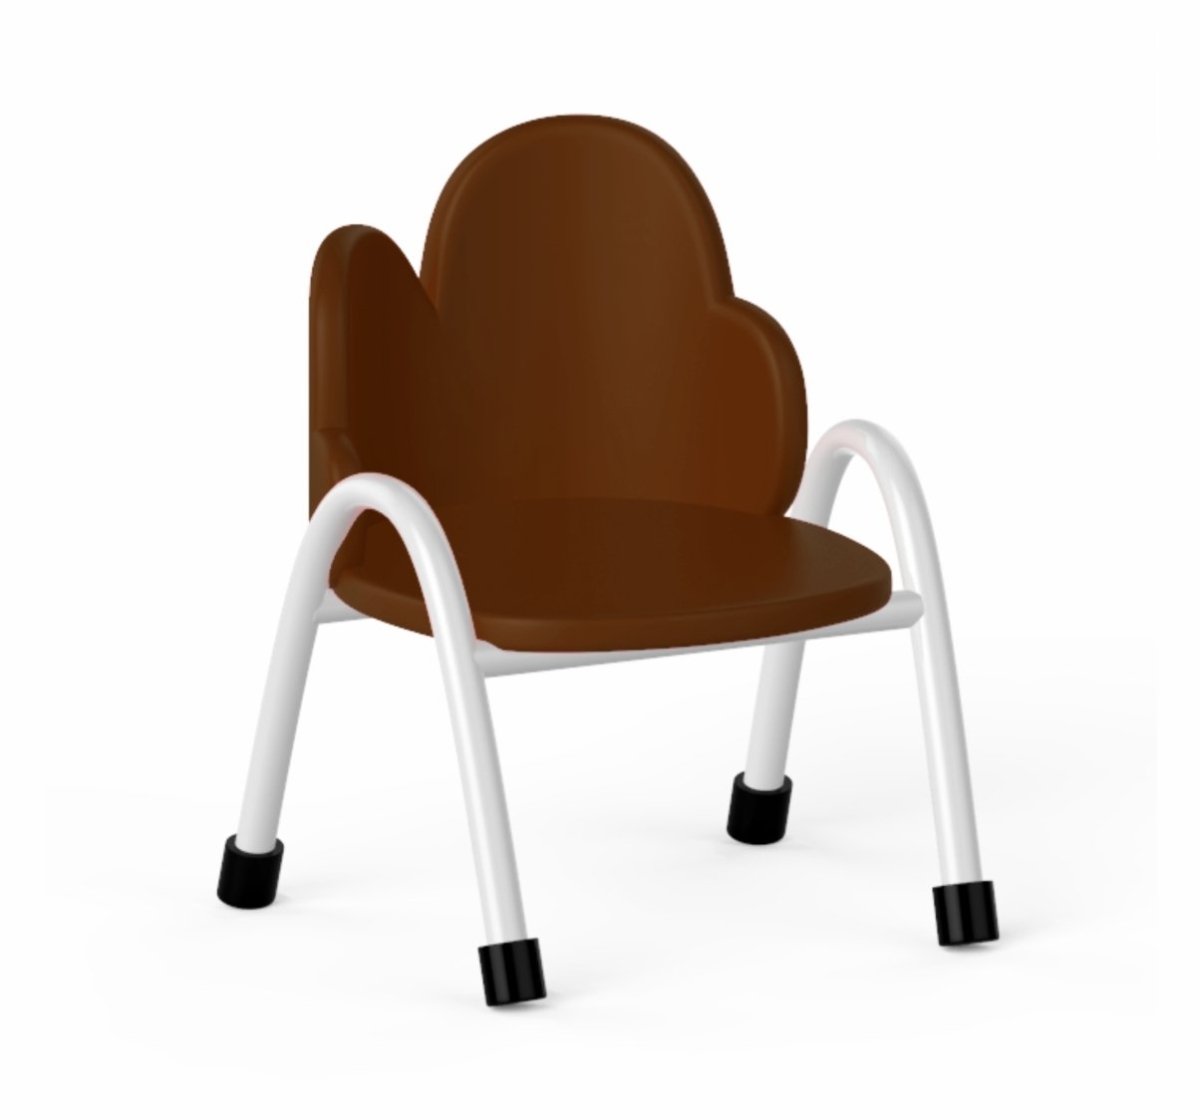 OK Play Cloud Chair - Brown - FTFF000651